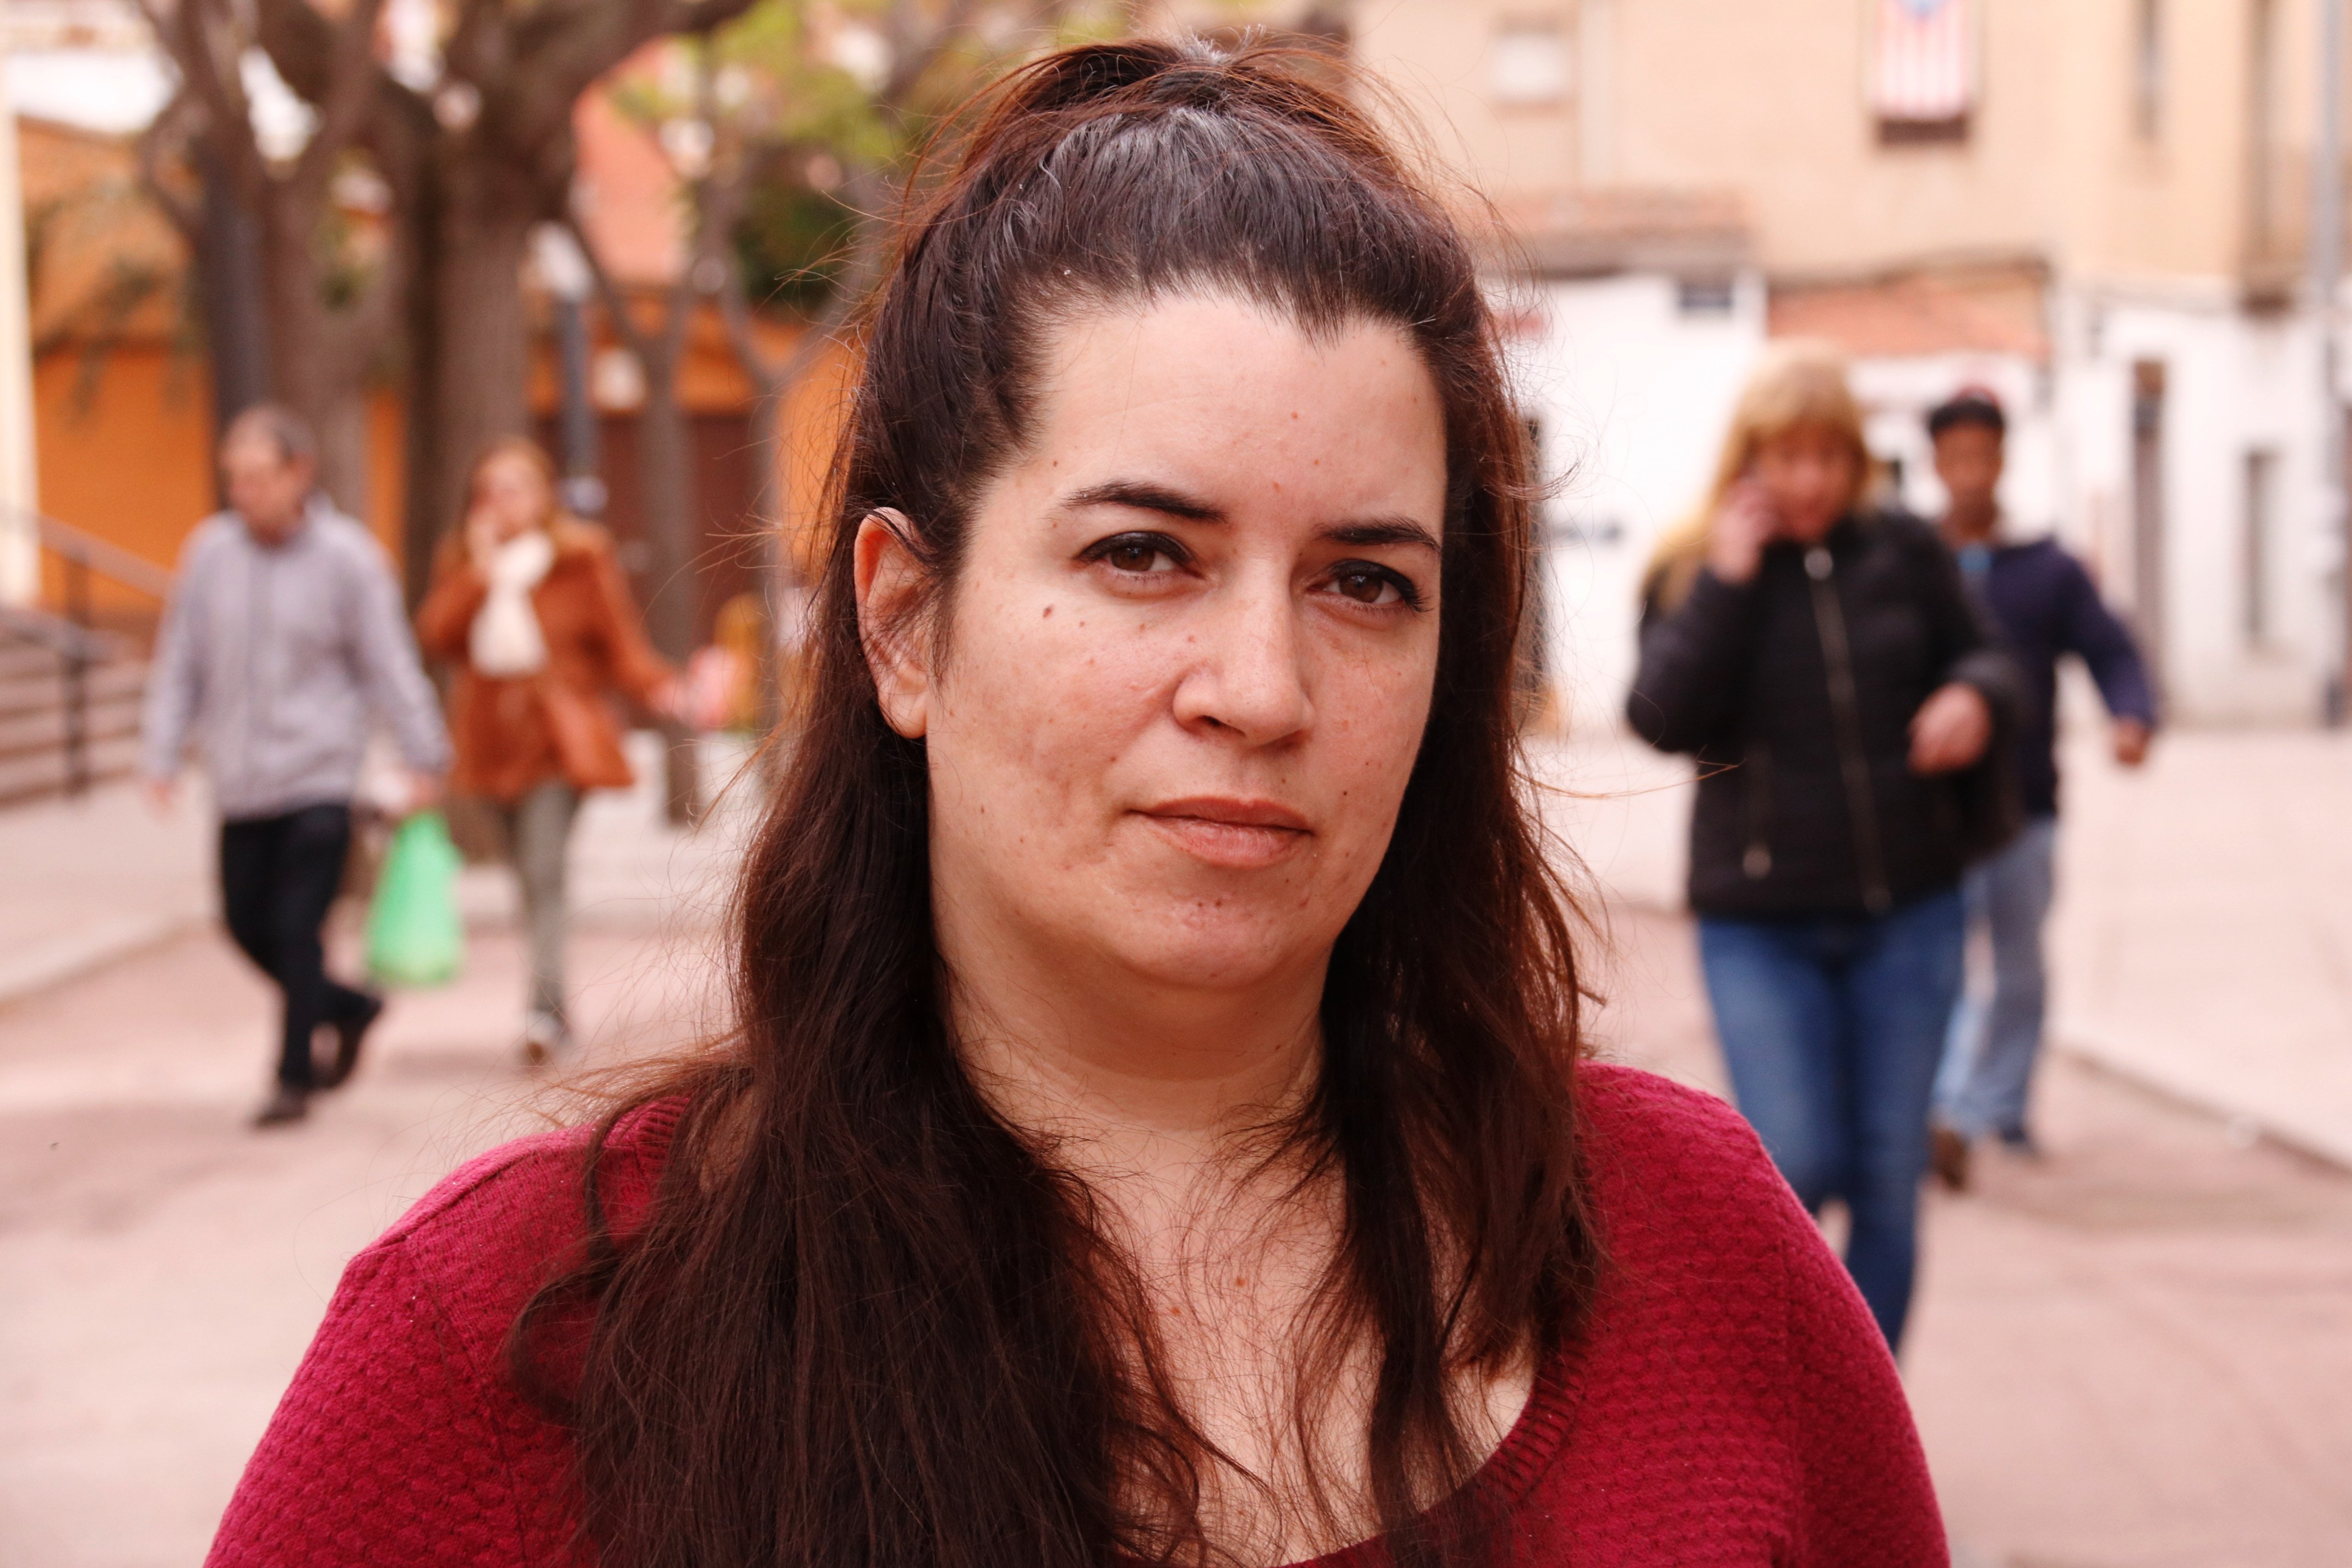 Catalan independence activist Tamara Carrasco, found not guilty after 30 month ordeal